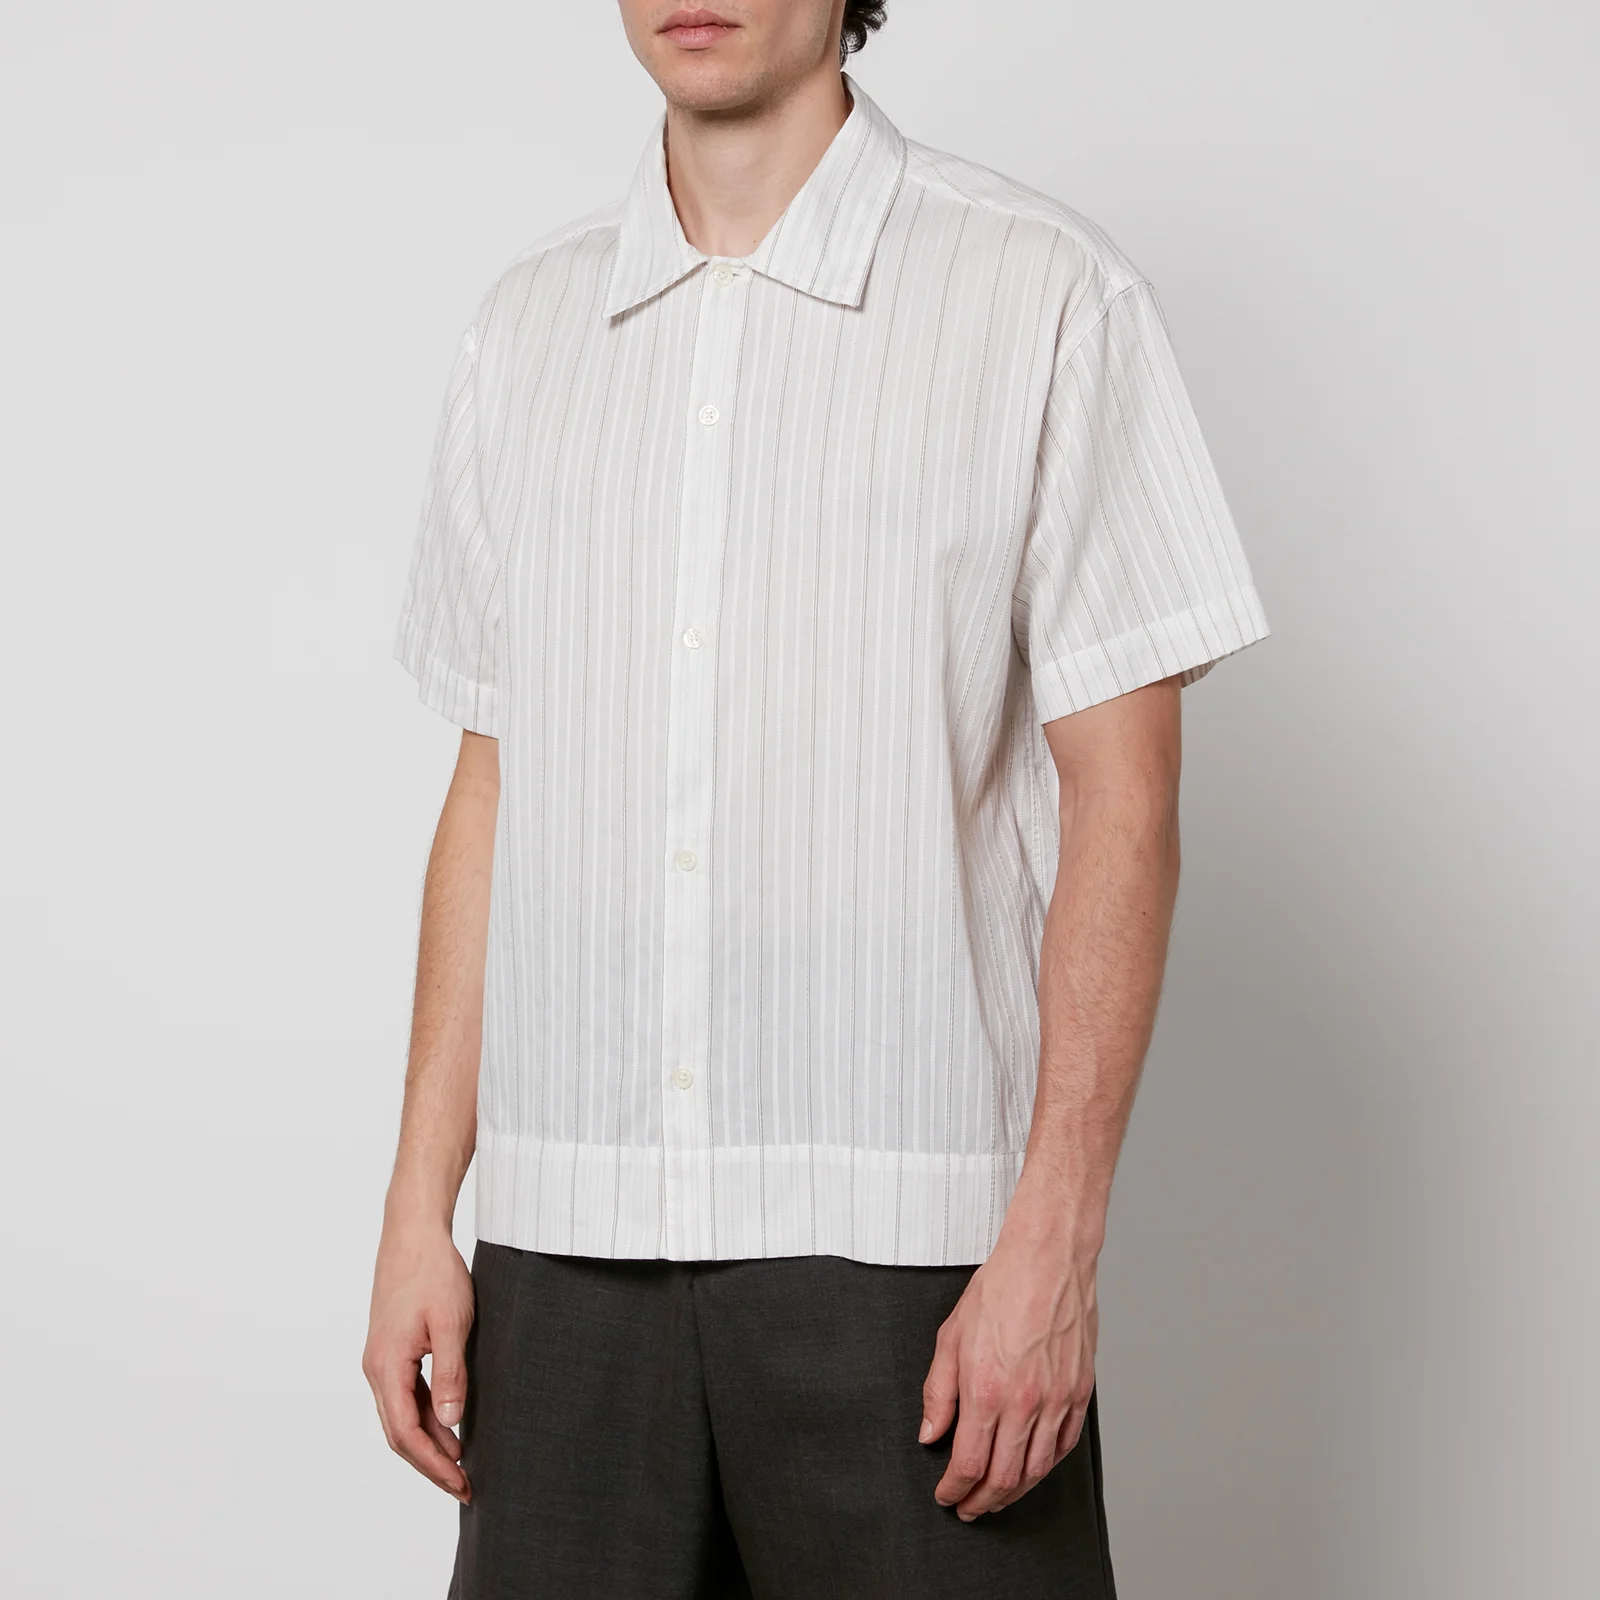 mfpen Holiday Striped Cotton Shirt - M Image 1